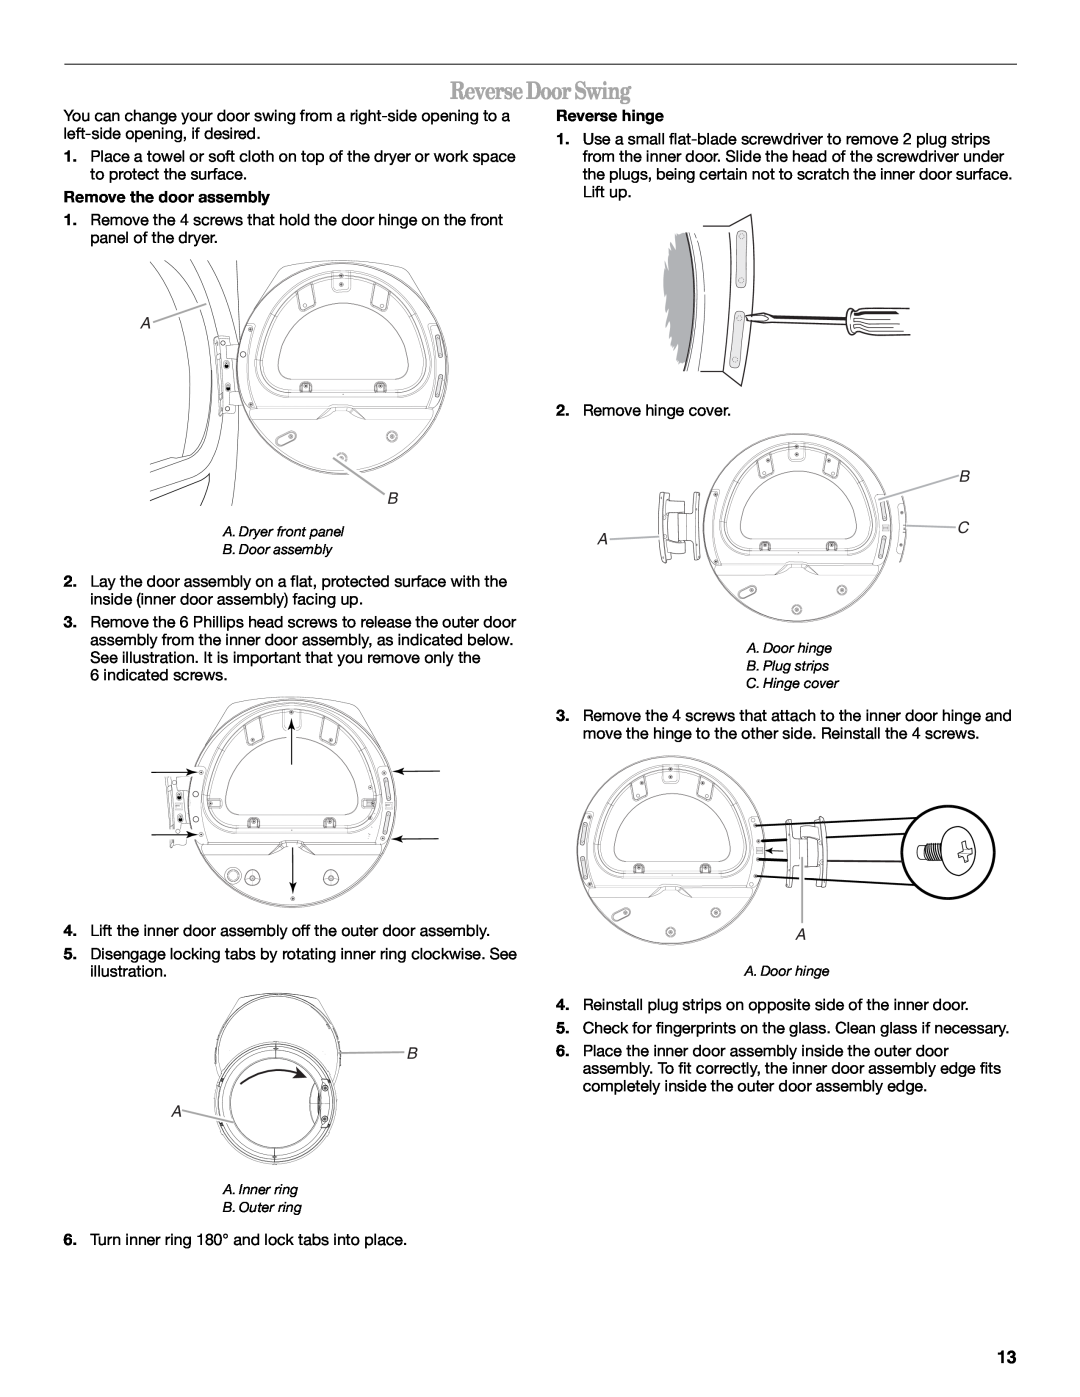 Whirlpool DUET SPORT, W10057260 manual ReverseDoorSwing, Remove the door assembly, Reverse hinge, B C A 